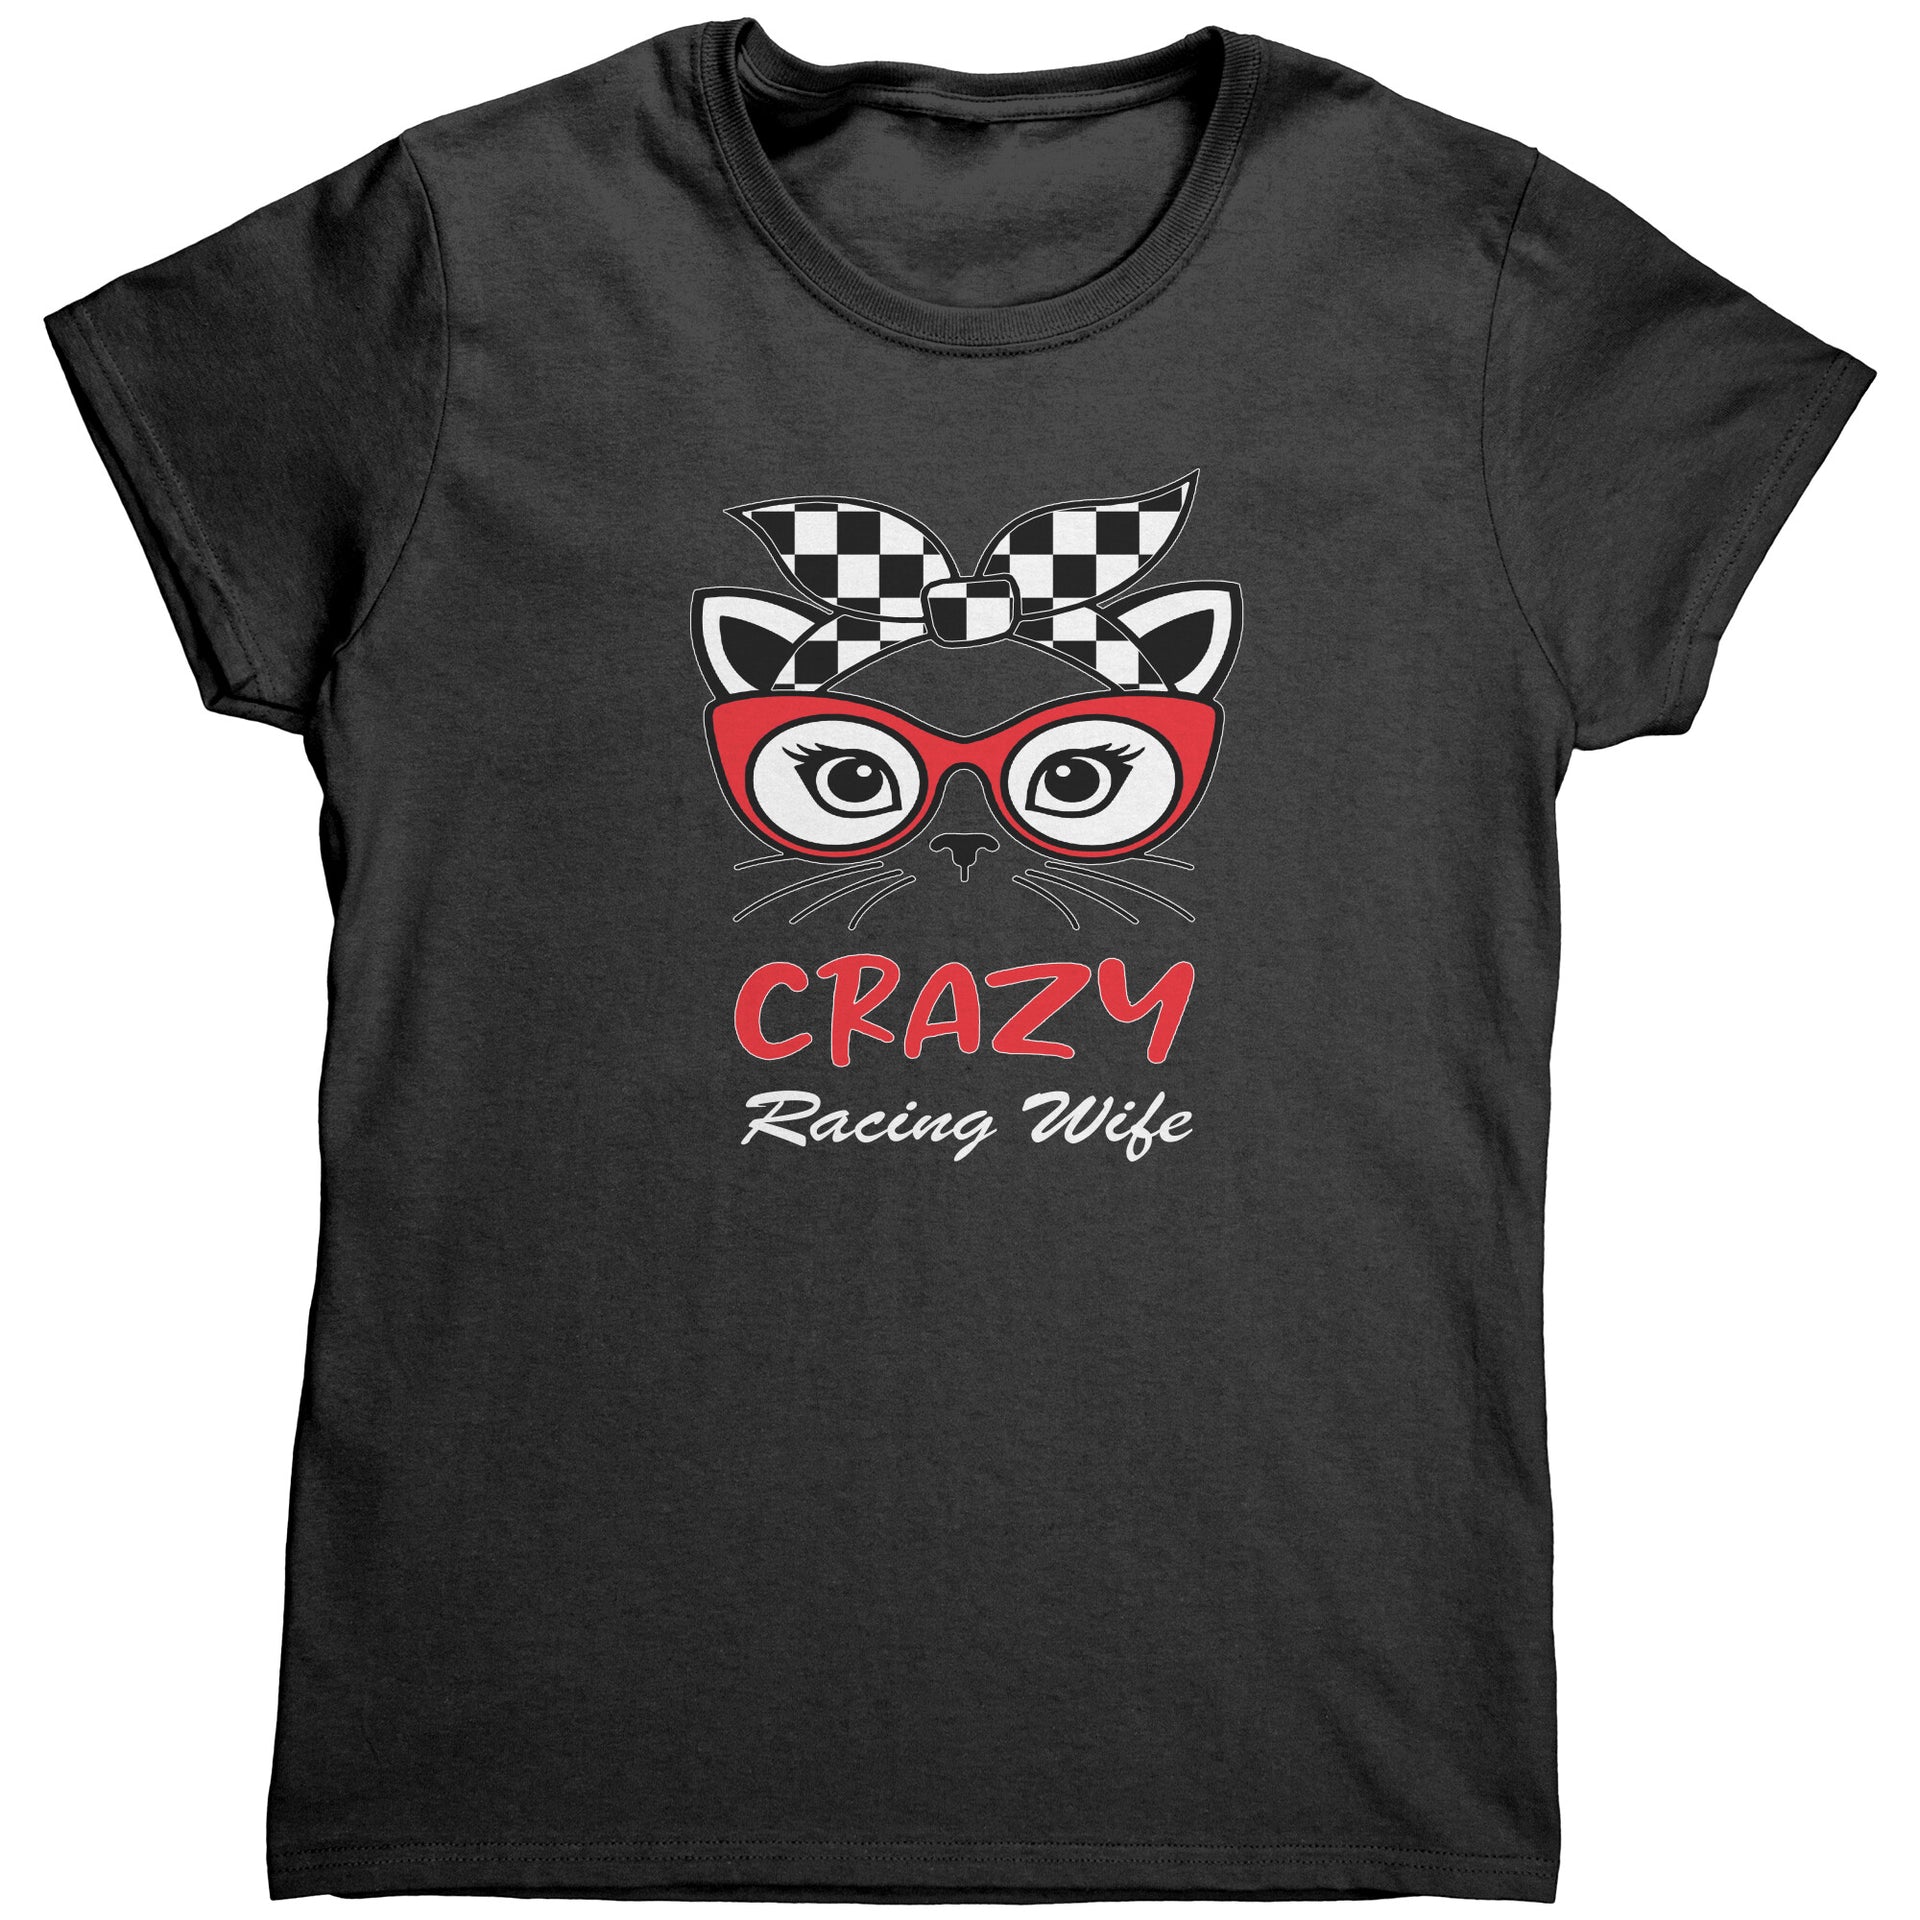 Racing Wife T-Shirts